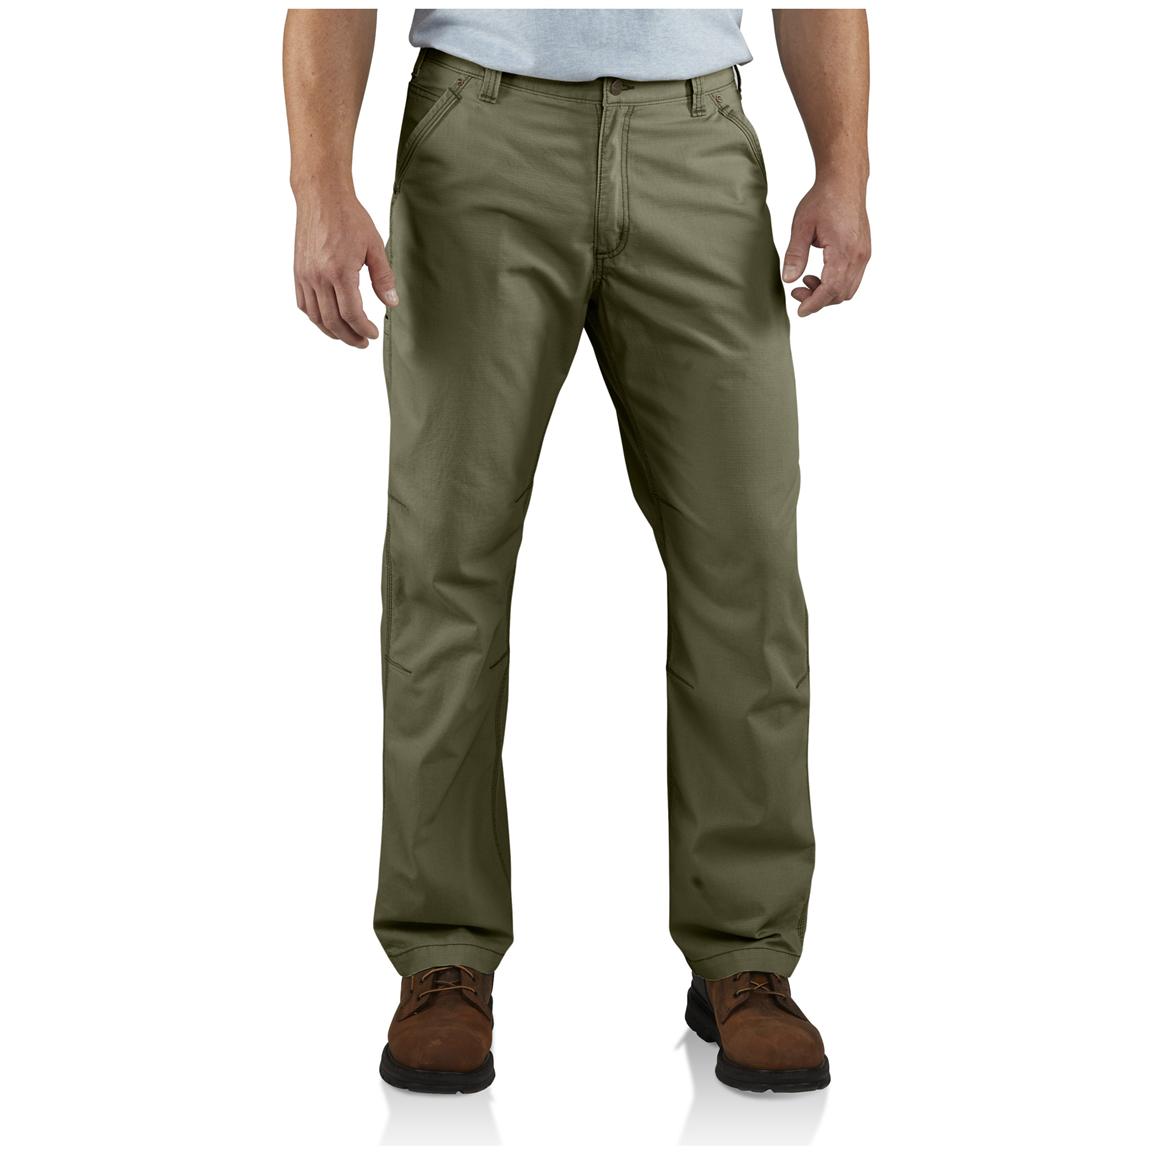 Men's CarharttÂ® Tacoma Ripstop Pants - 282891, Jeans & Pants at Sportsman's Guide